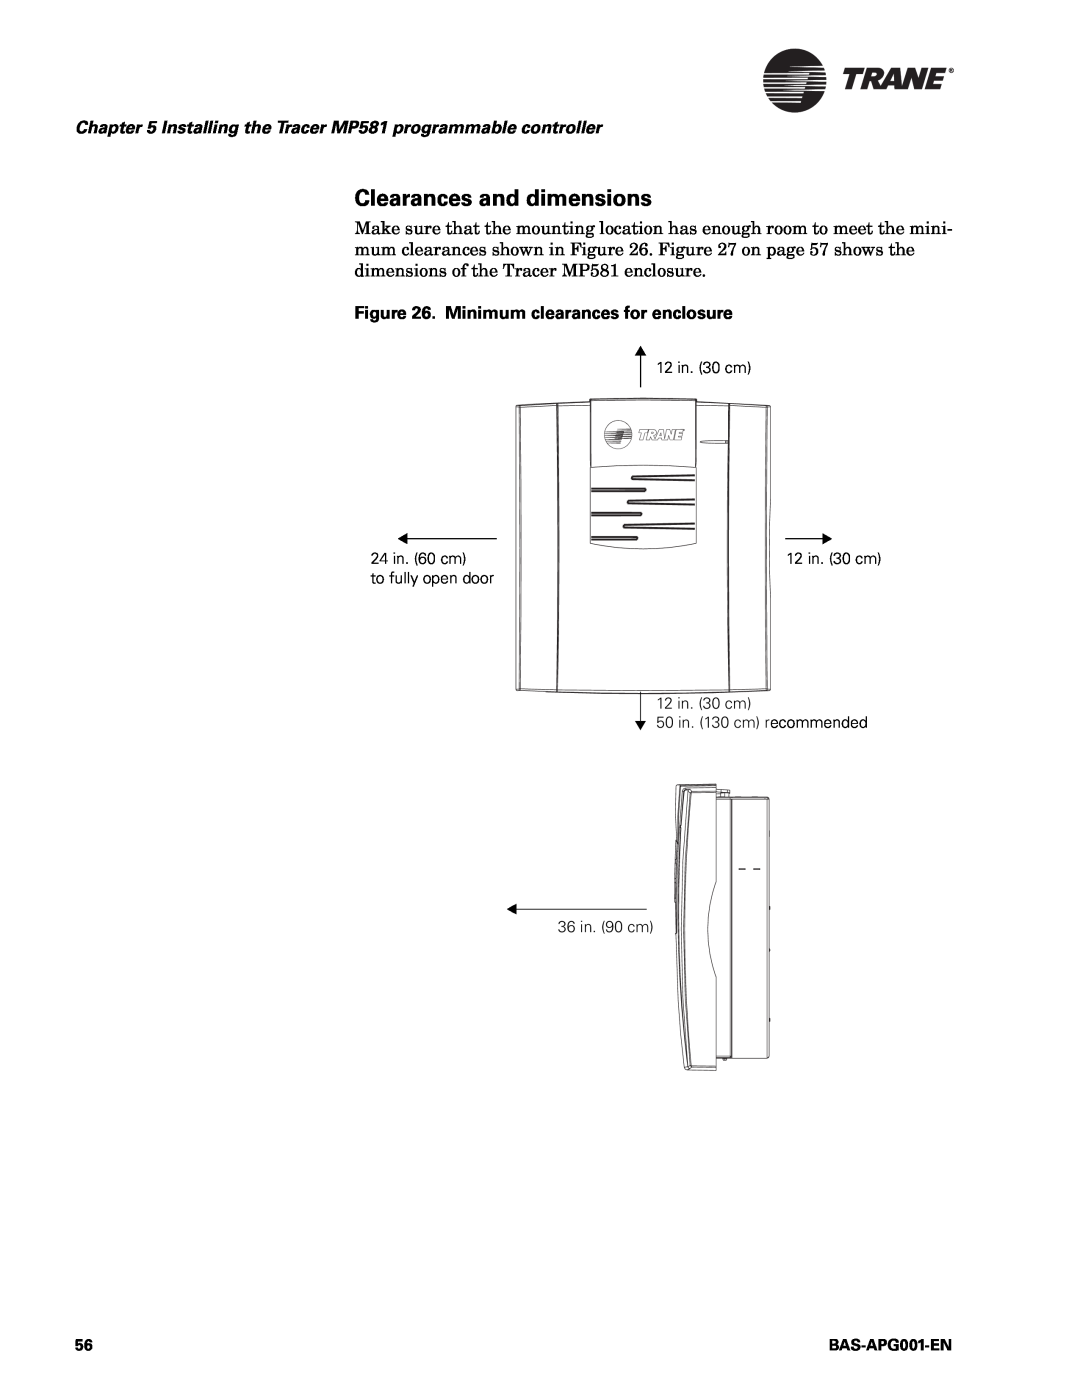 Trane BAS-APG001-EN manual Clearances and dimensions, Minimum clearances for enclosure, 12 in. 30 cm 